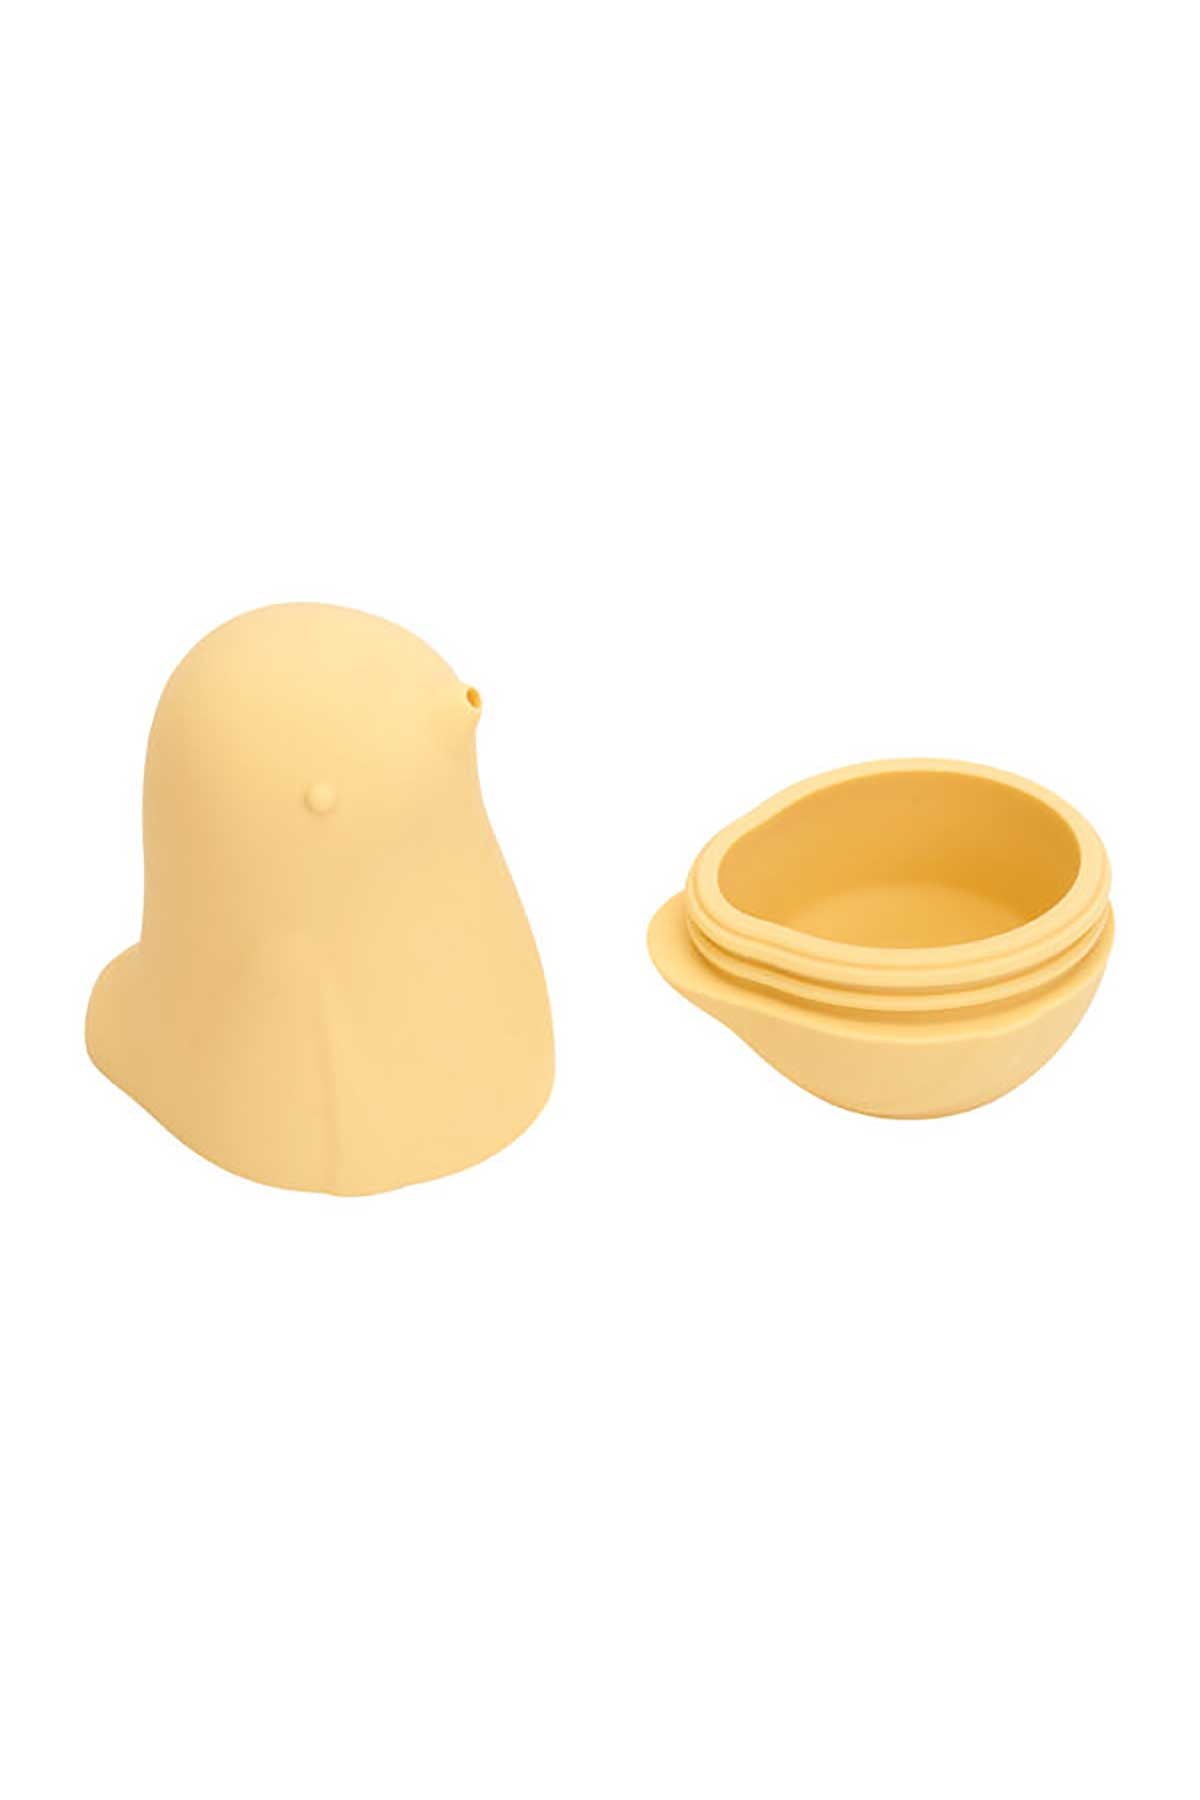 Annabel Trends Squeezy Bird Bath Toys Yellow